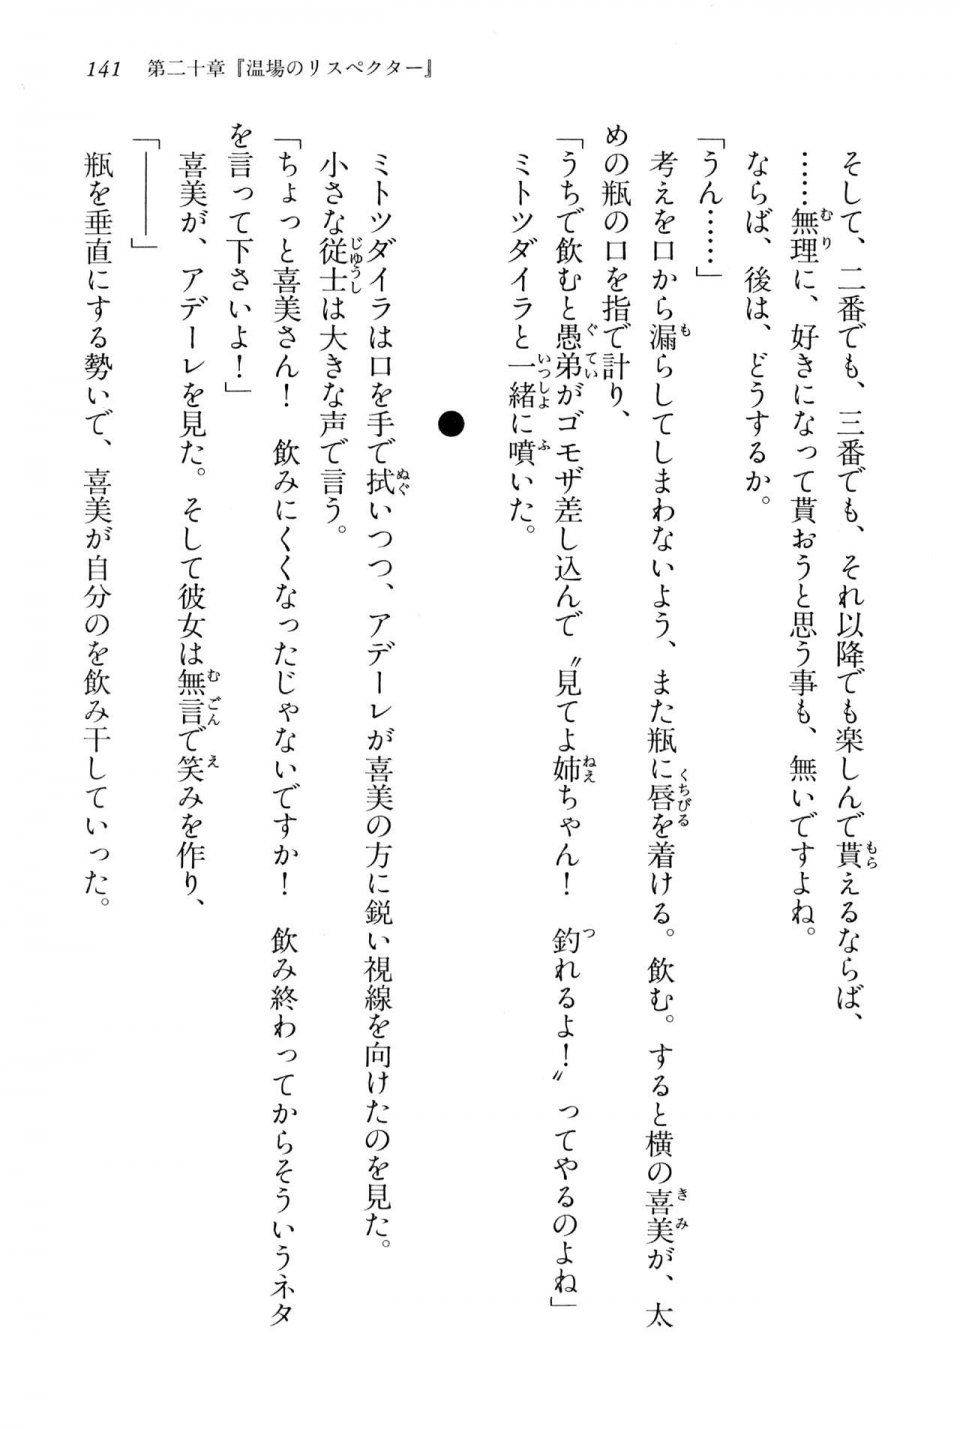 Kyoukai Senjou no Horizon BD Special Mininovel Vol 4(2B) - Photo #145